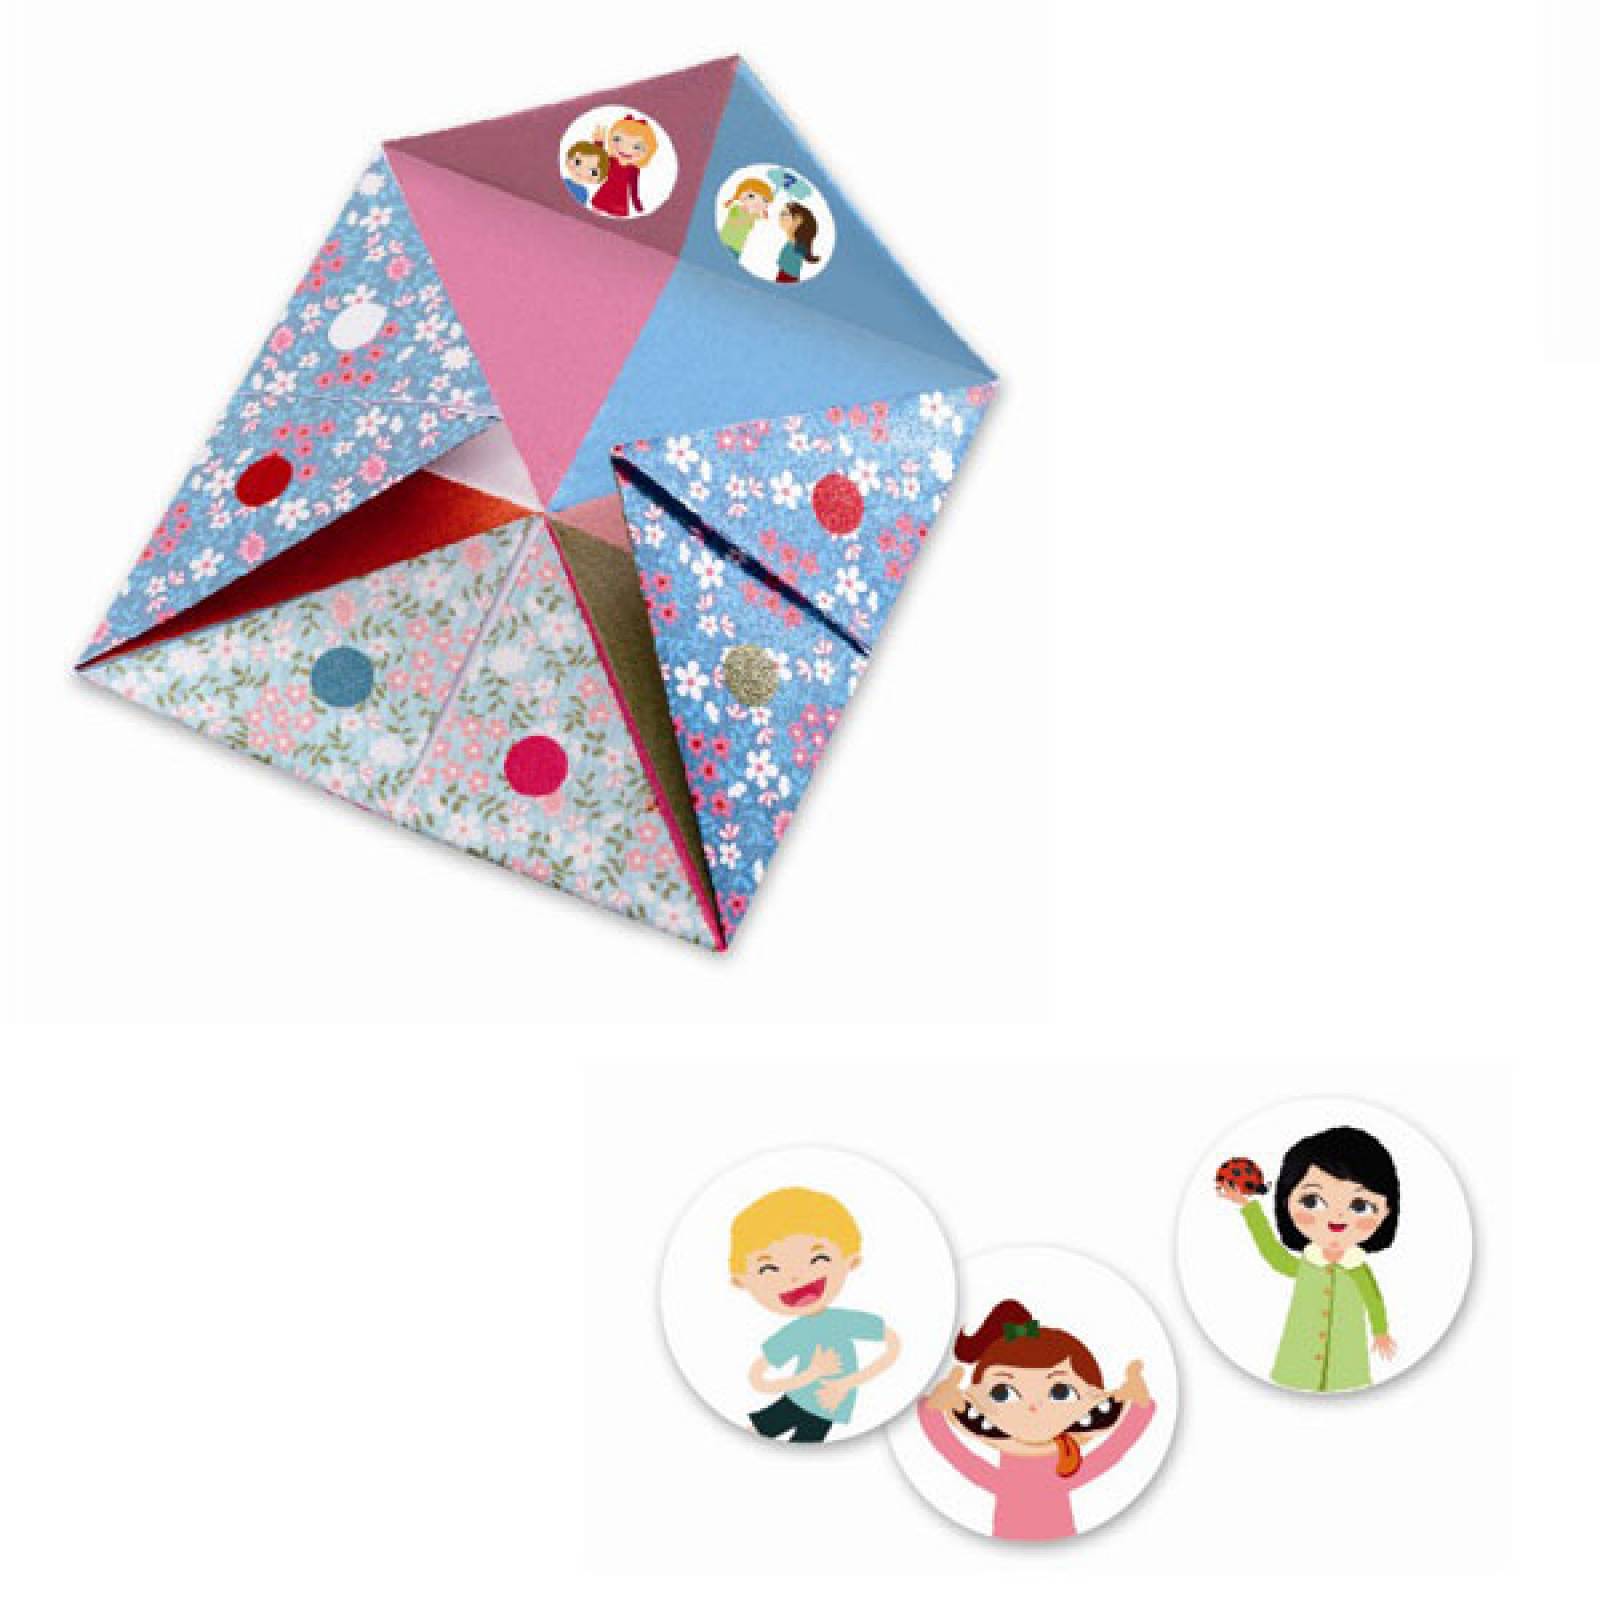 Flower Fortune Tellers - Origami Craft Kit 6+ thumbnails